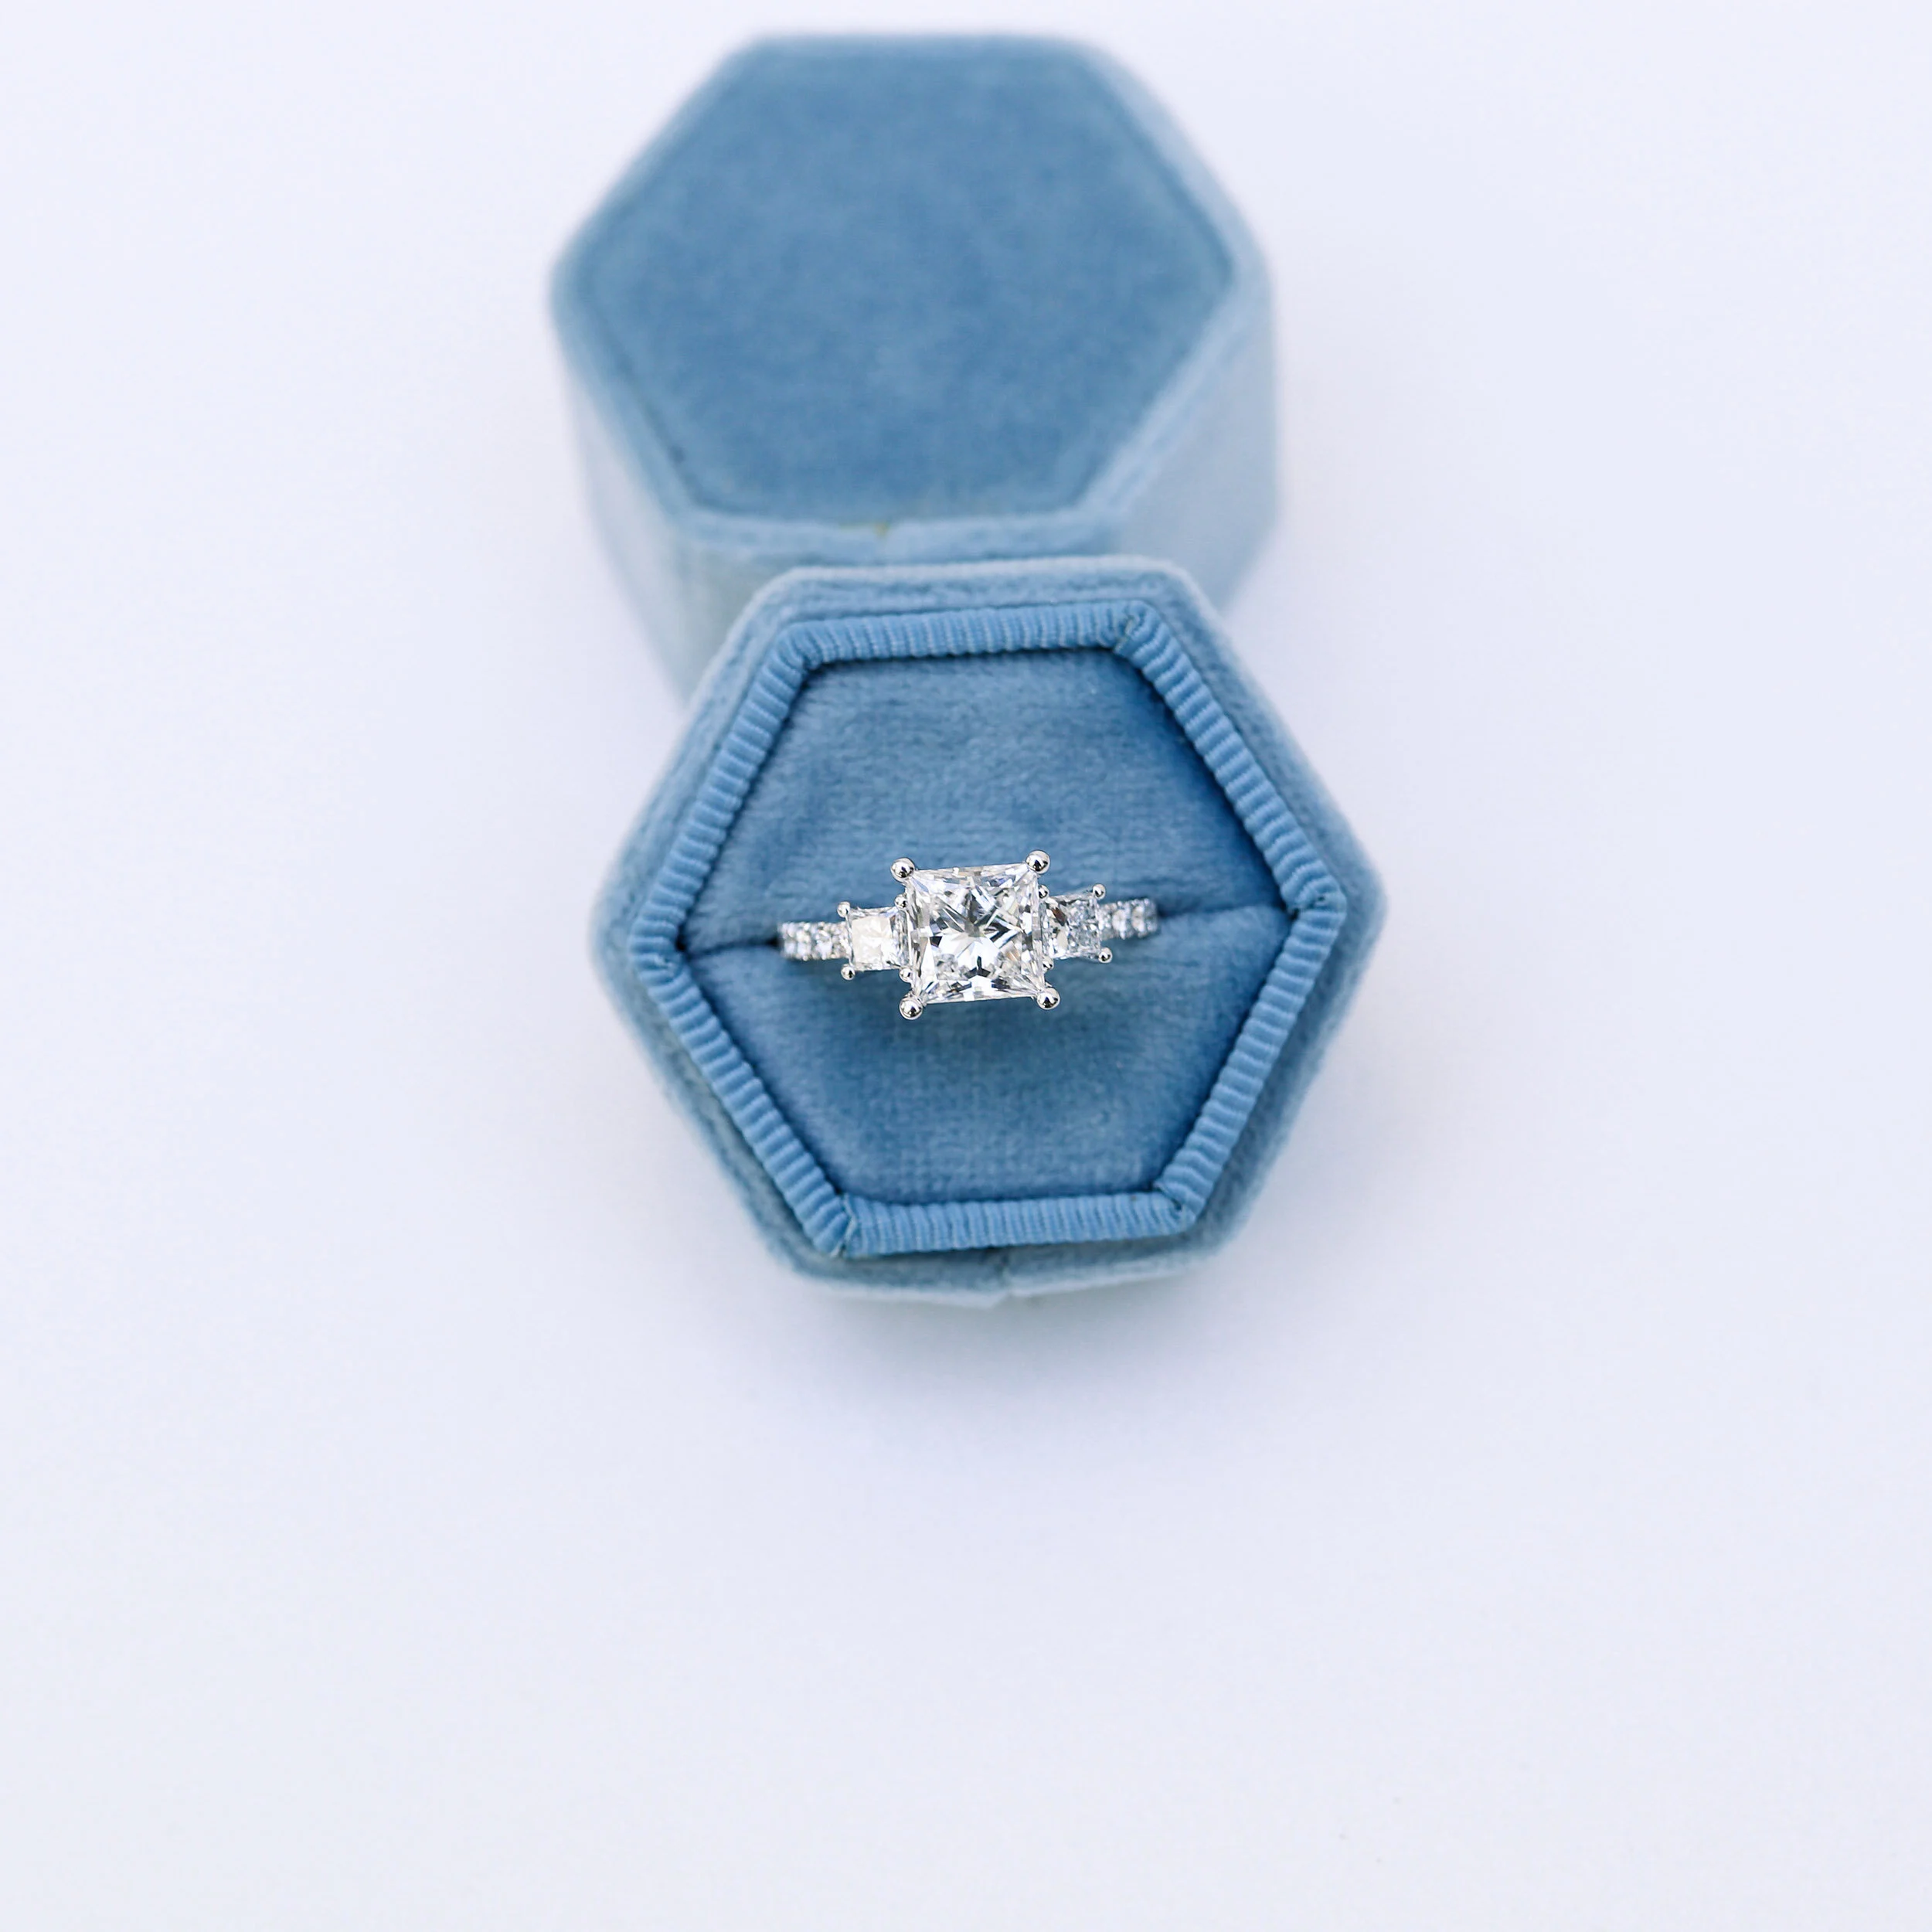 White Gold 1.75ct Princess Cut Pavé 3 Stone Ring with Man Made Diamonds Ada Diamonds Design AD-477 in Box